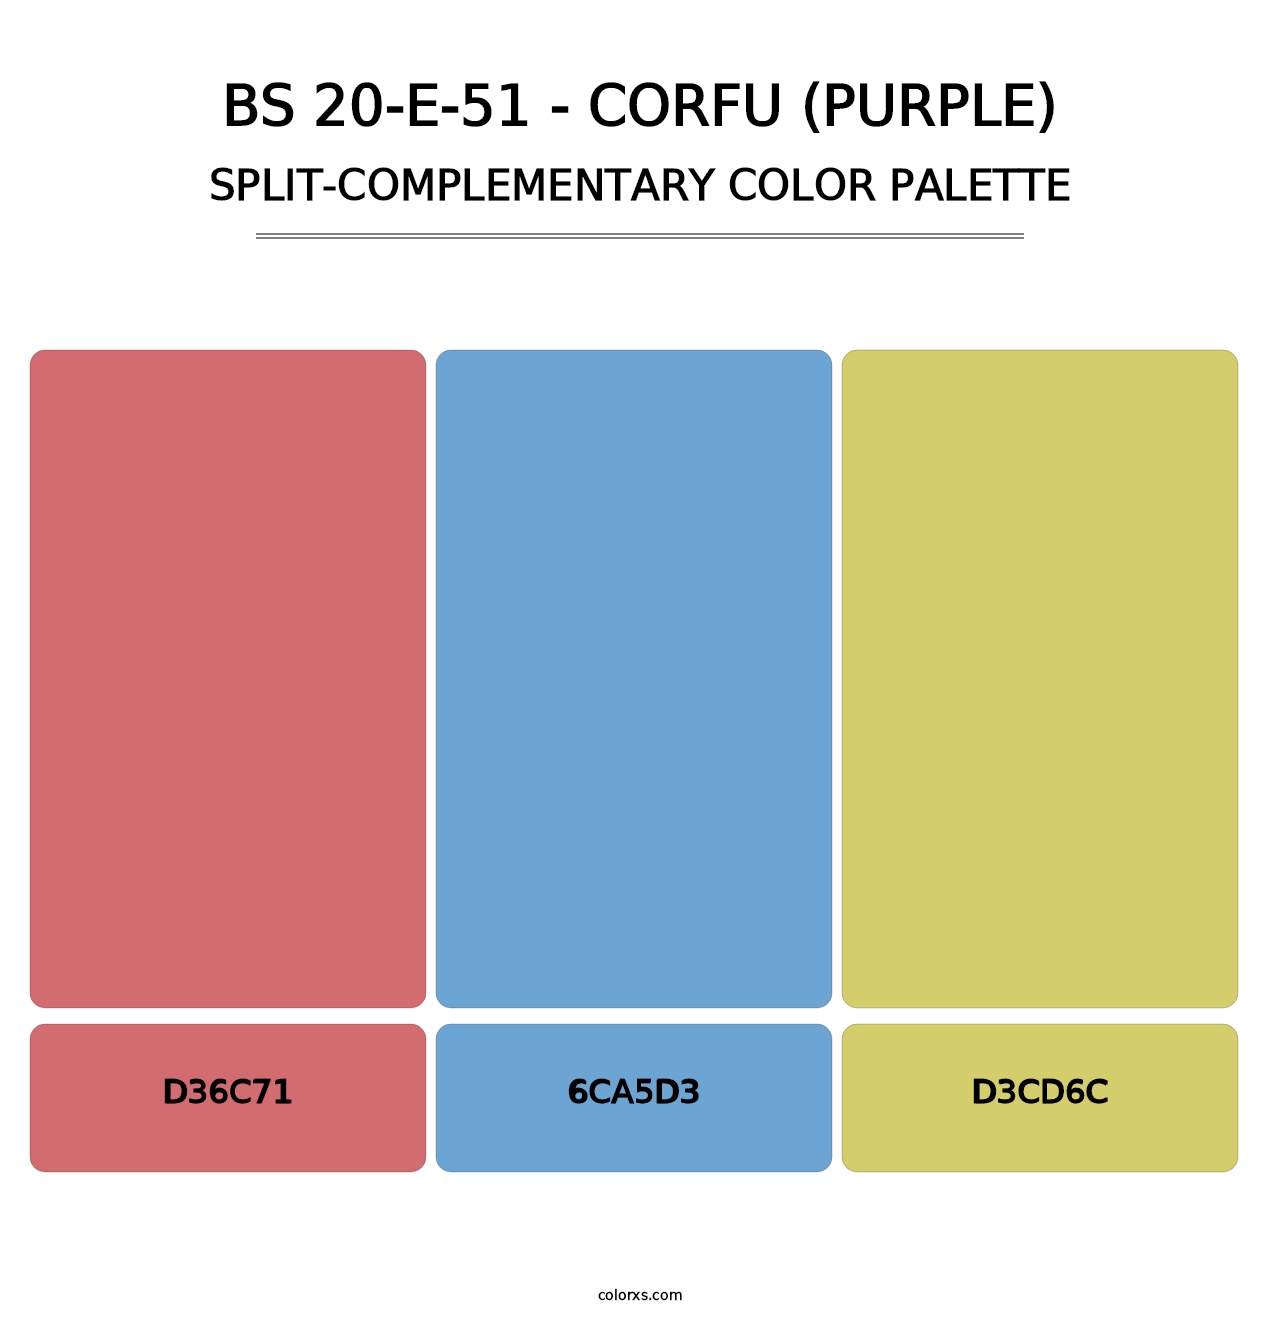 BS 20-E-51 - Corfu (Purple) - Split-Complementary Color Palette